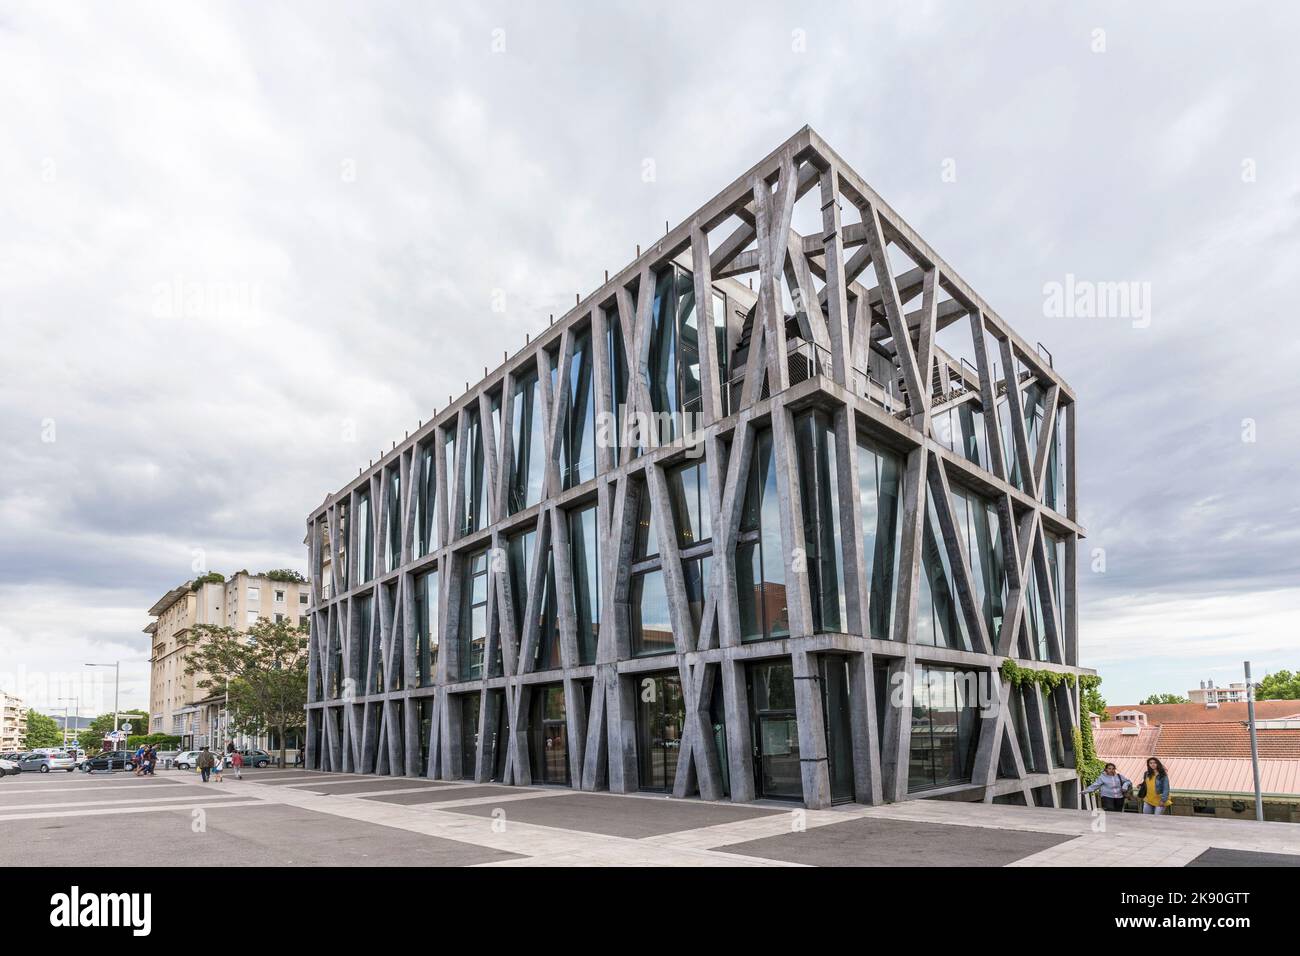 AIX EN PROVENCE, FRANKREICH - 2. JUNI 2016: Berühmter Pavillon de noir in Aix en Provence. Das von Rudy Ricciotti entworfene Gebäude gewann die große nationale pri Stockfoto